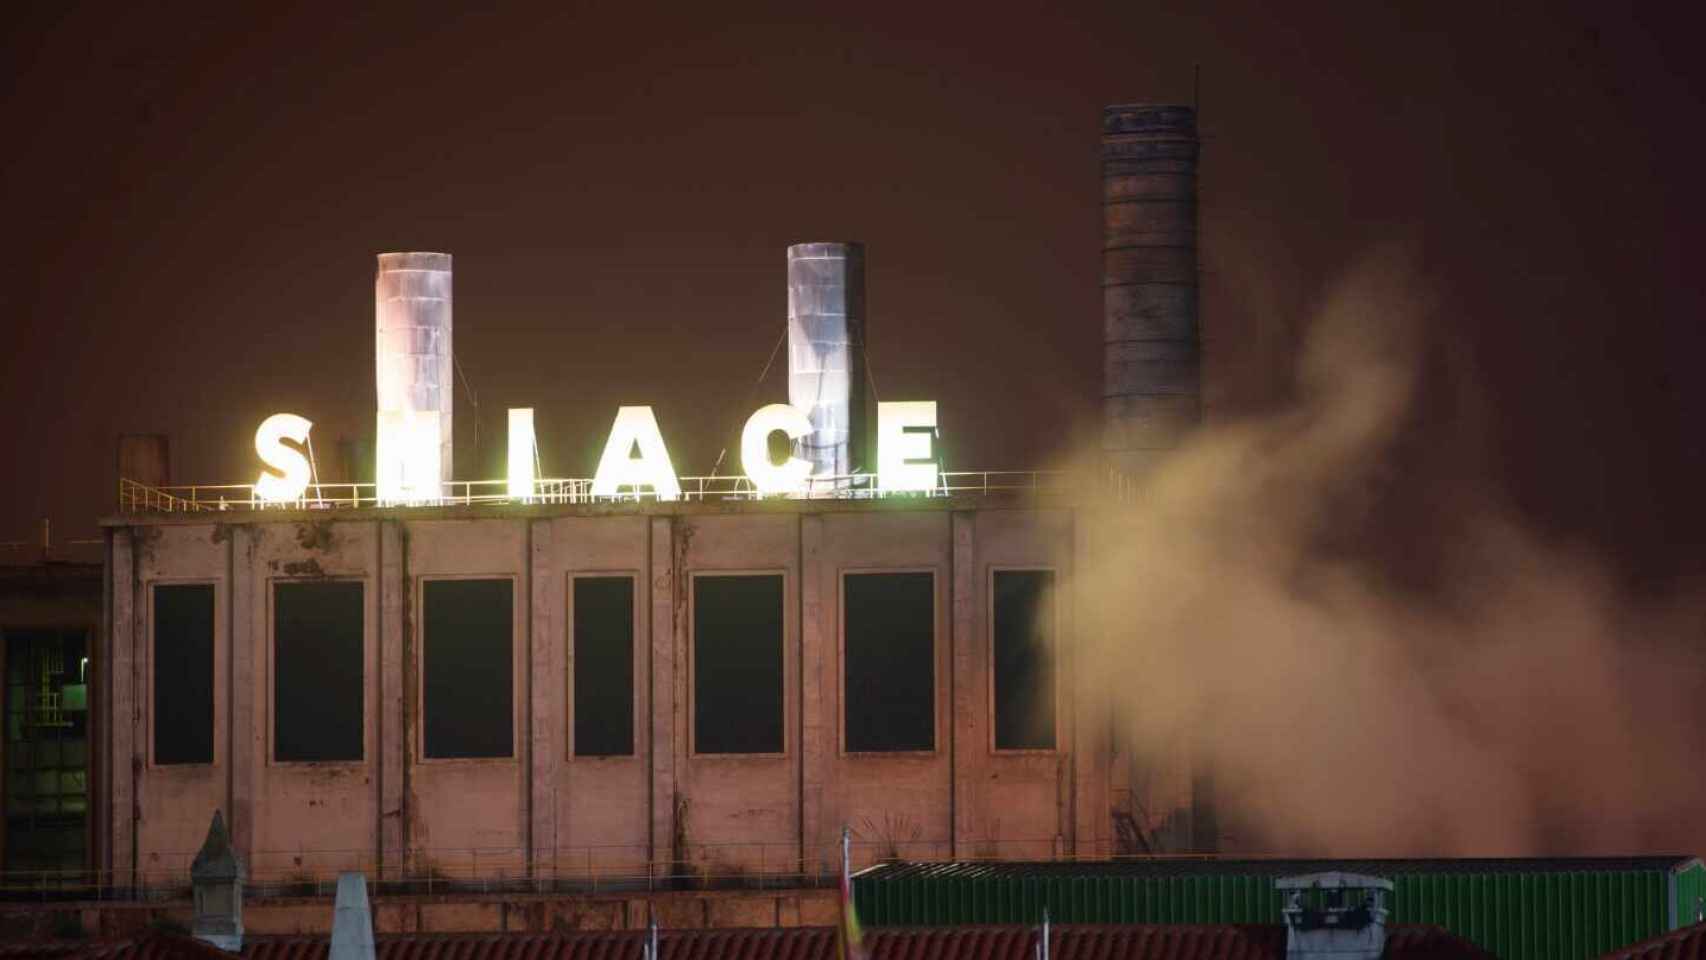 Vista nocturna de la histórica fábrica de Sniace en Torrelavega.